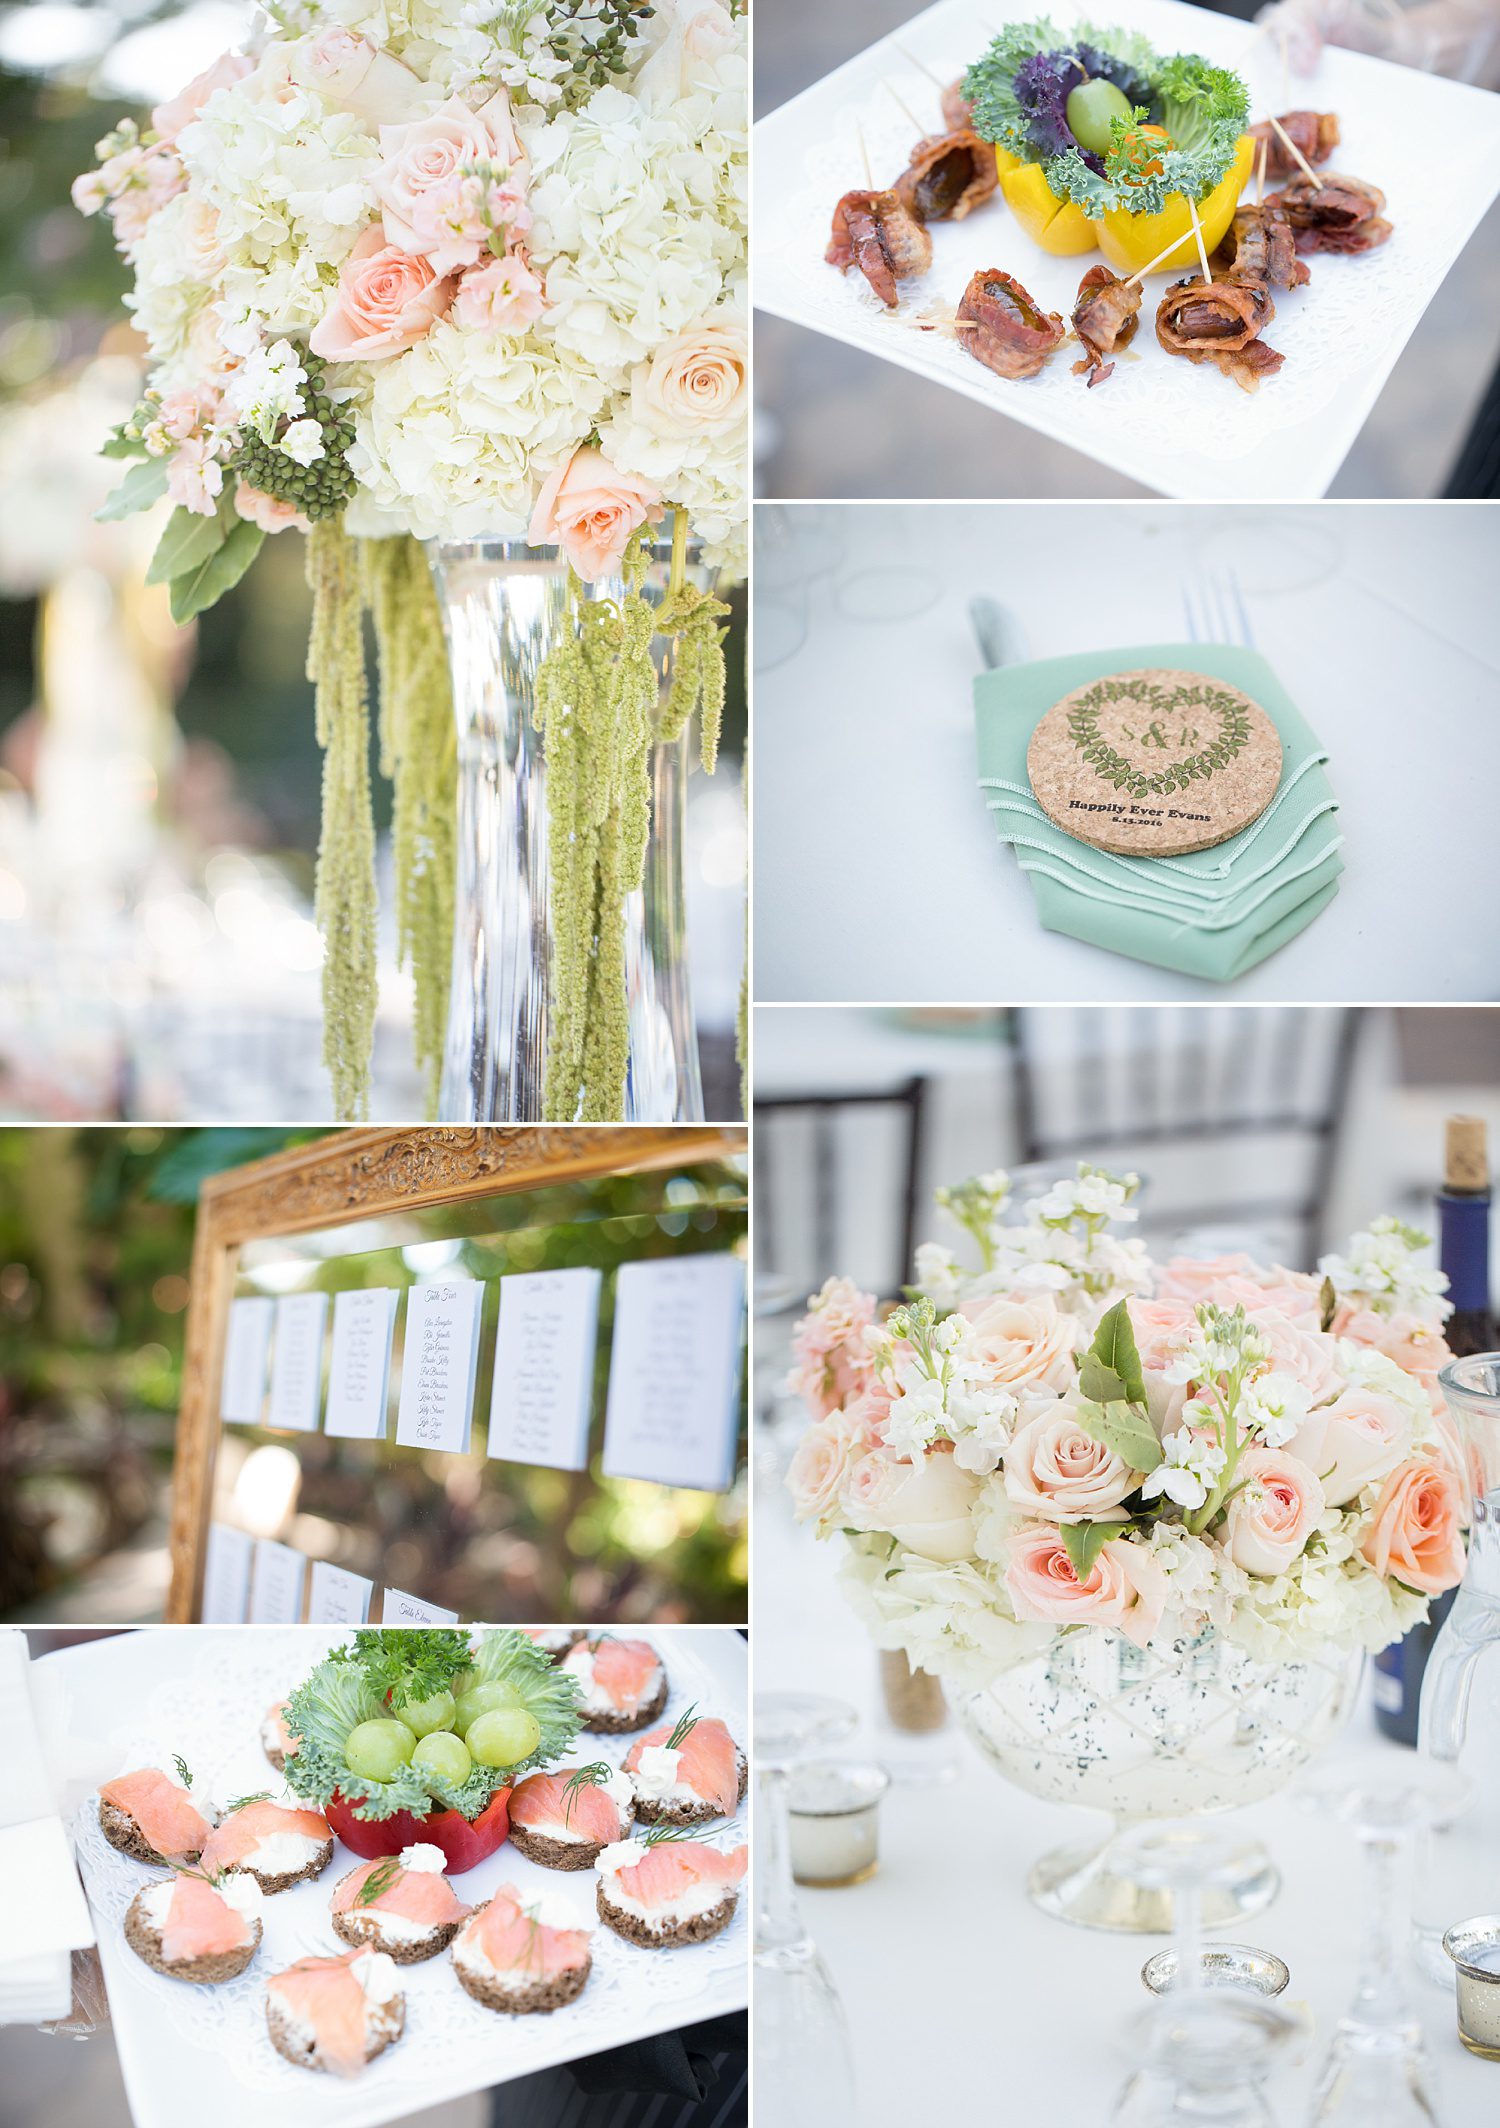 Oakley wedding, Brownstone Gardens wedding, wedding photographer